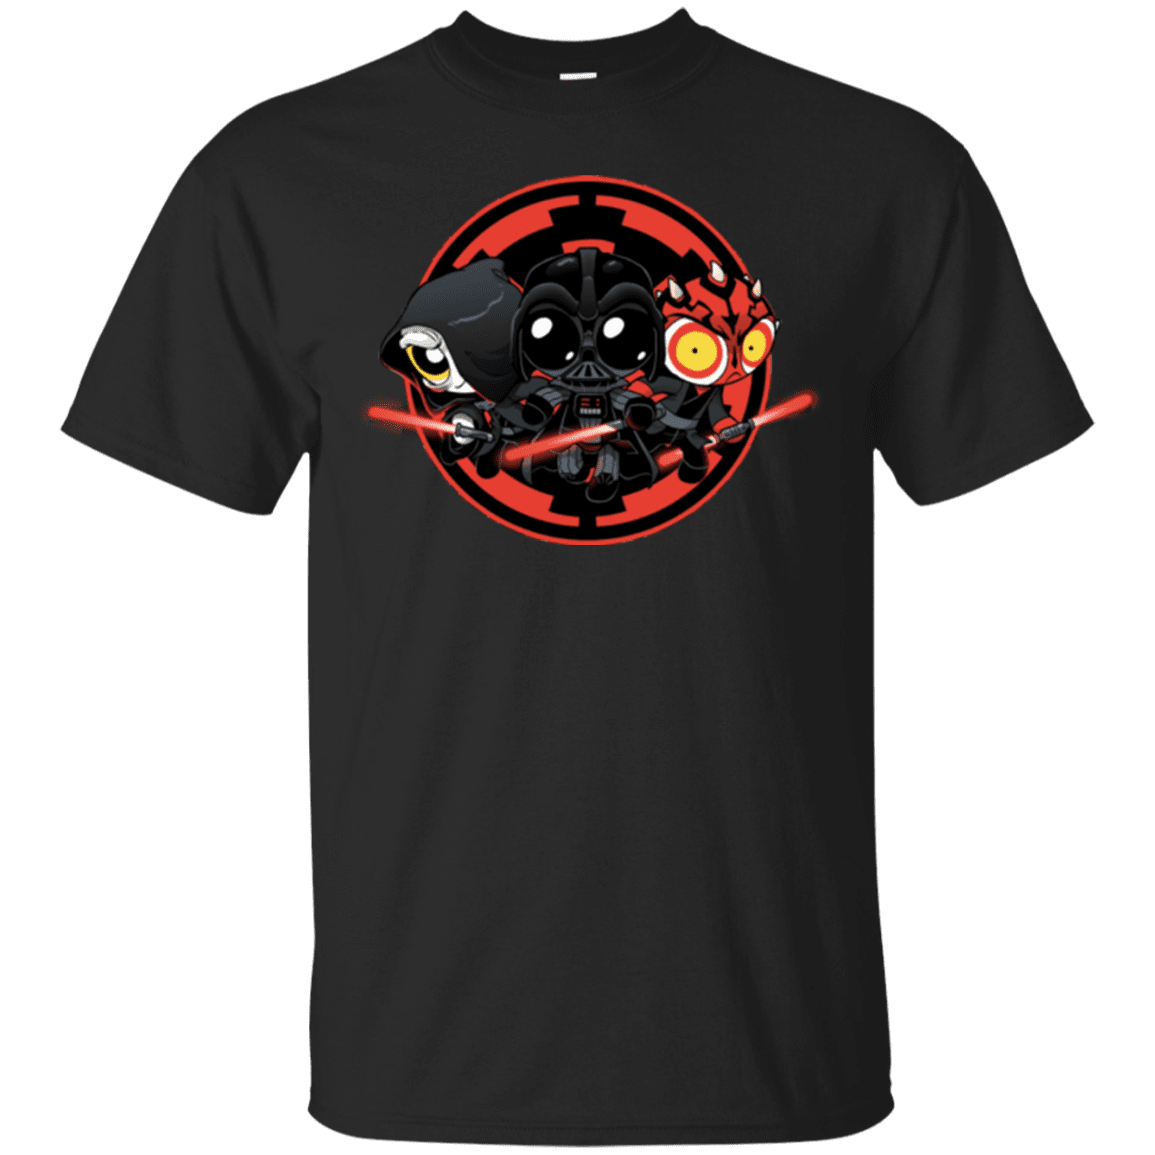 T-Shirts Black / Small Darkside (1) T-Shirt